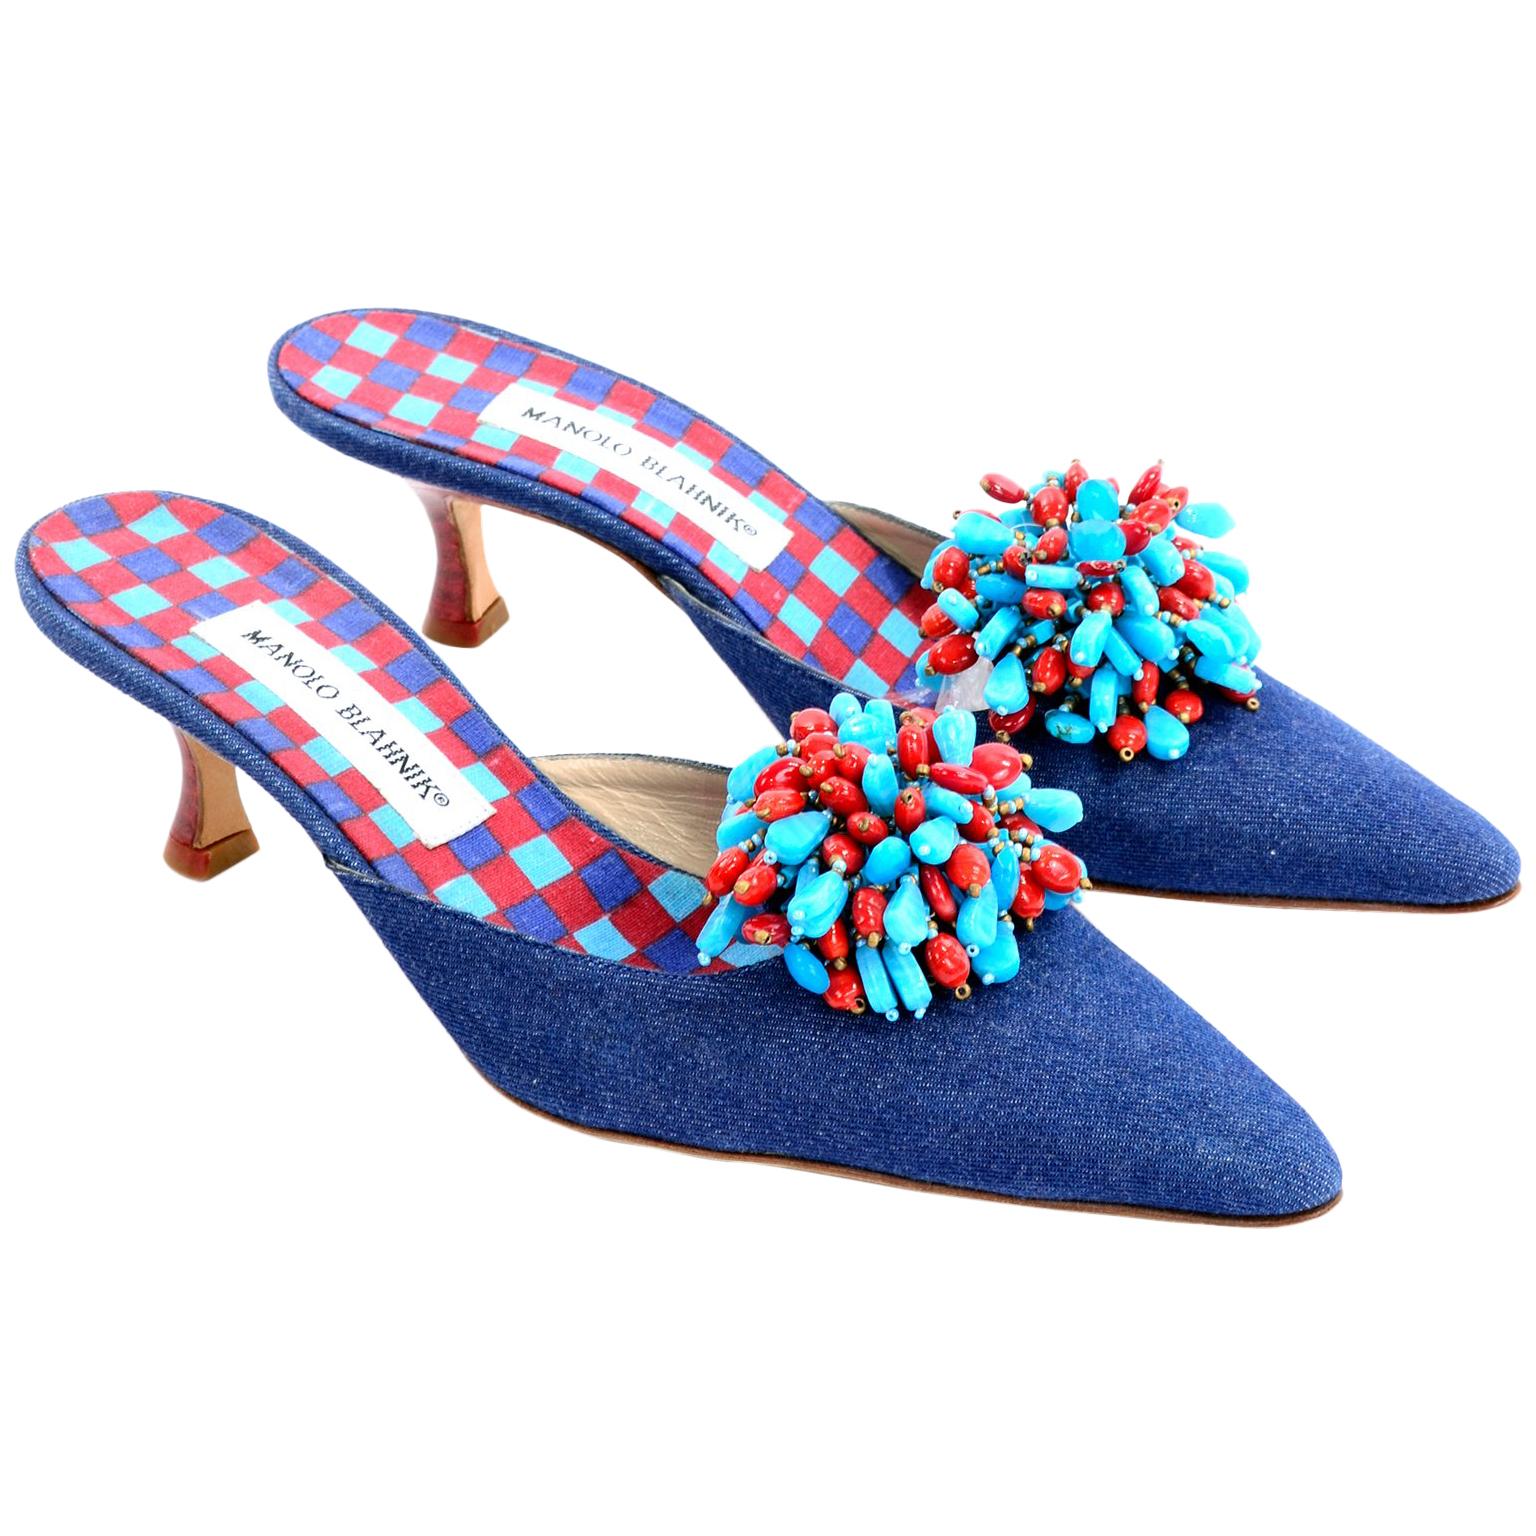 New Unworn Manolo Blahnik Shoes Denim Kitten Heel Mules W/ Red & Blue Beads 38.5